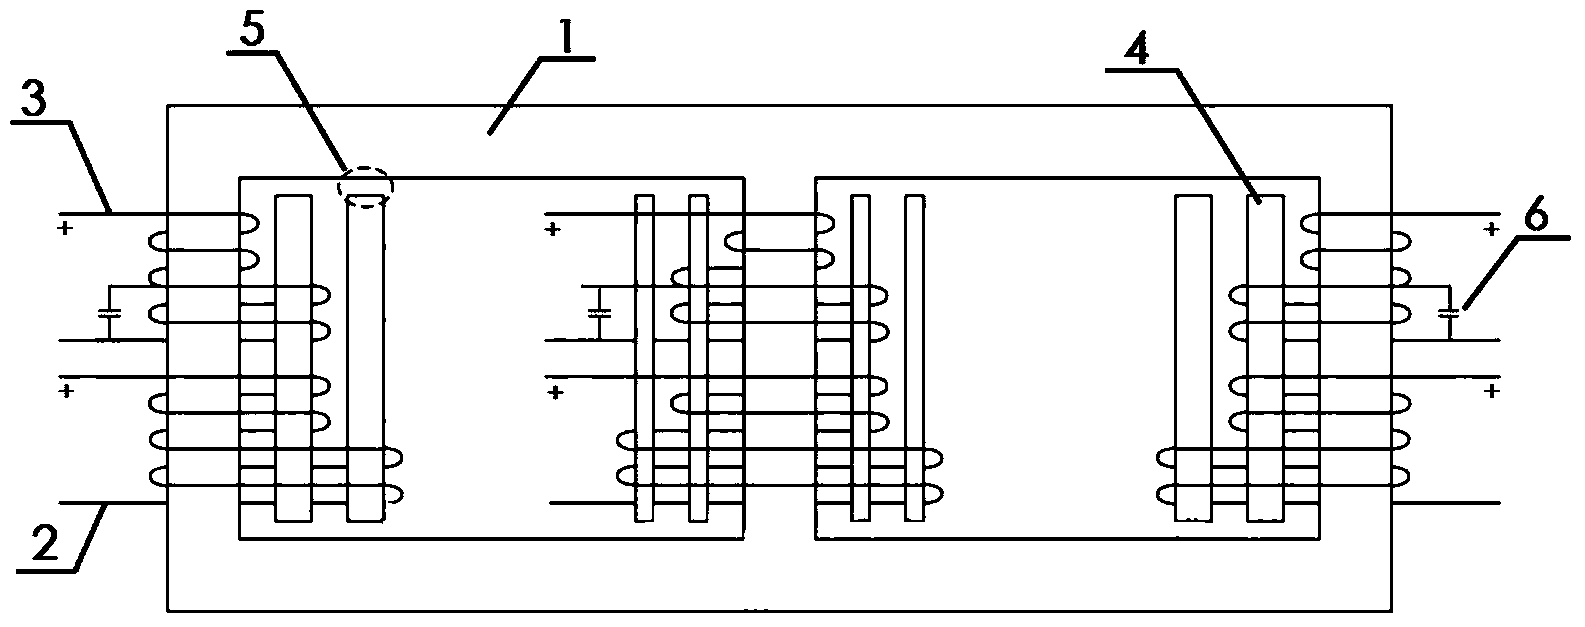 Magnetic-integration three-phase filter transformer